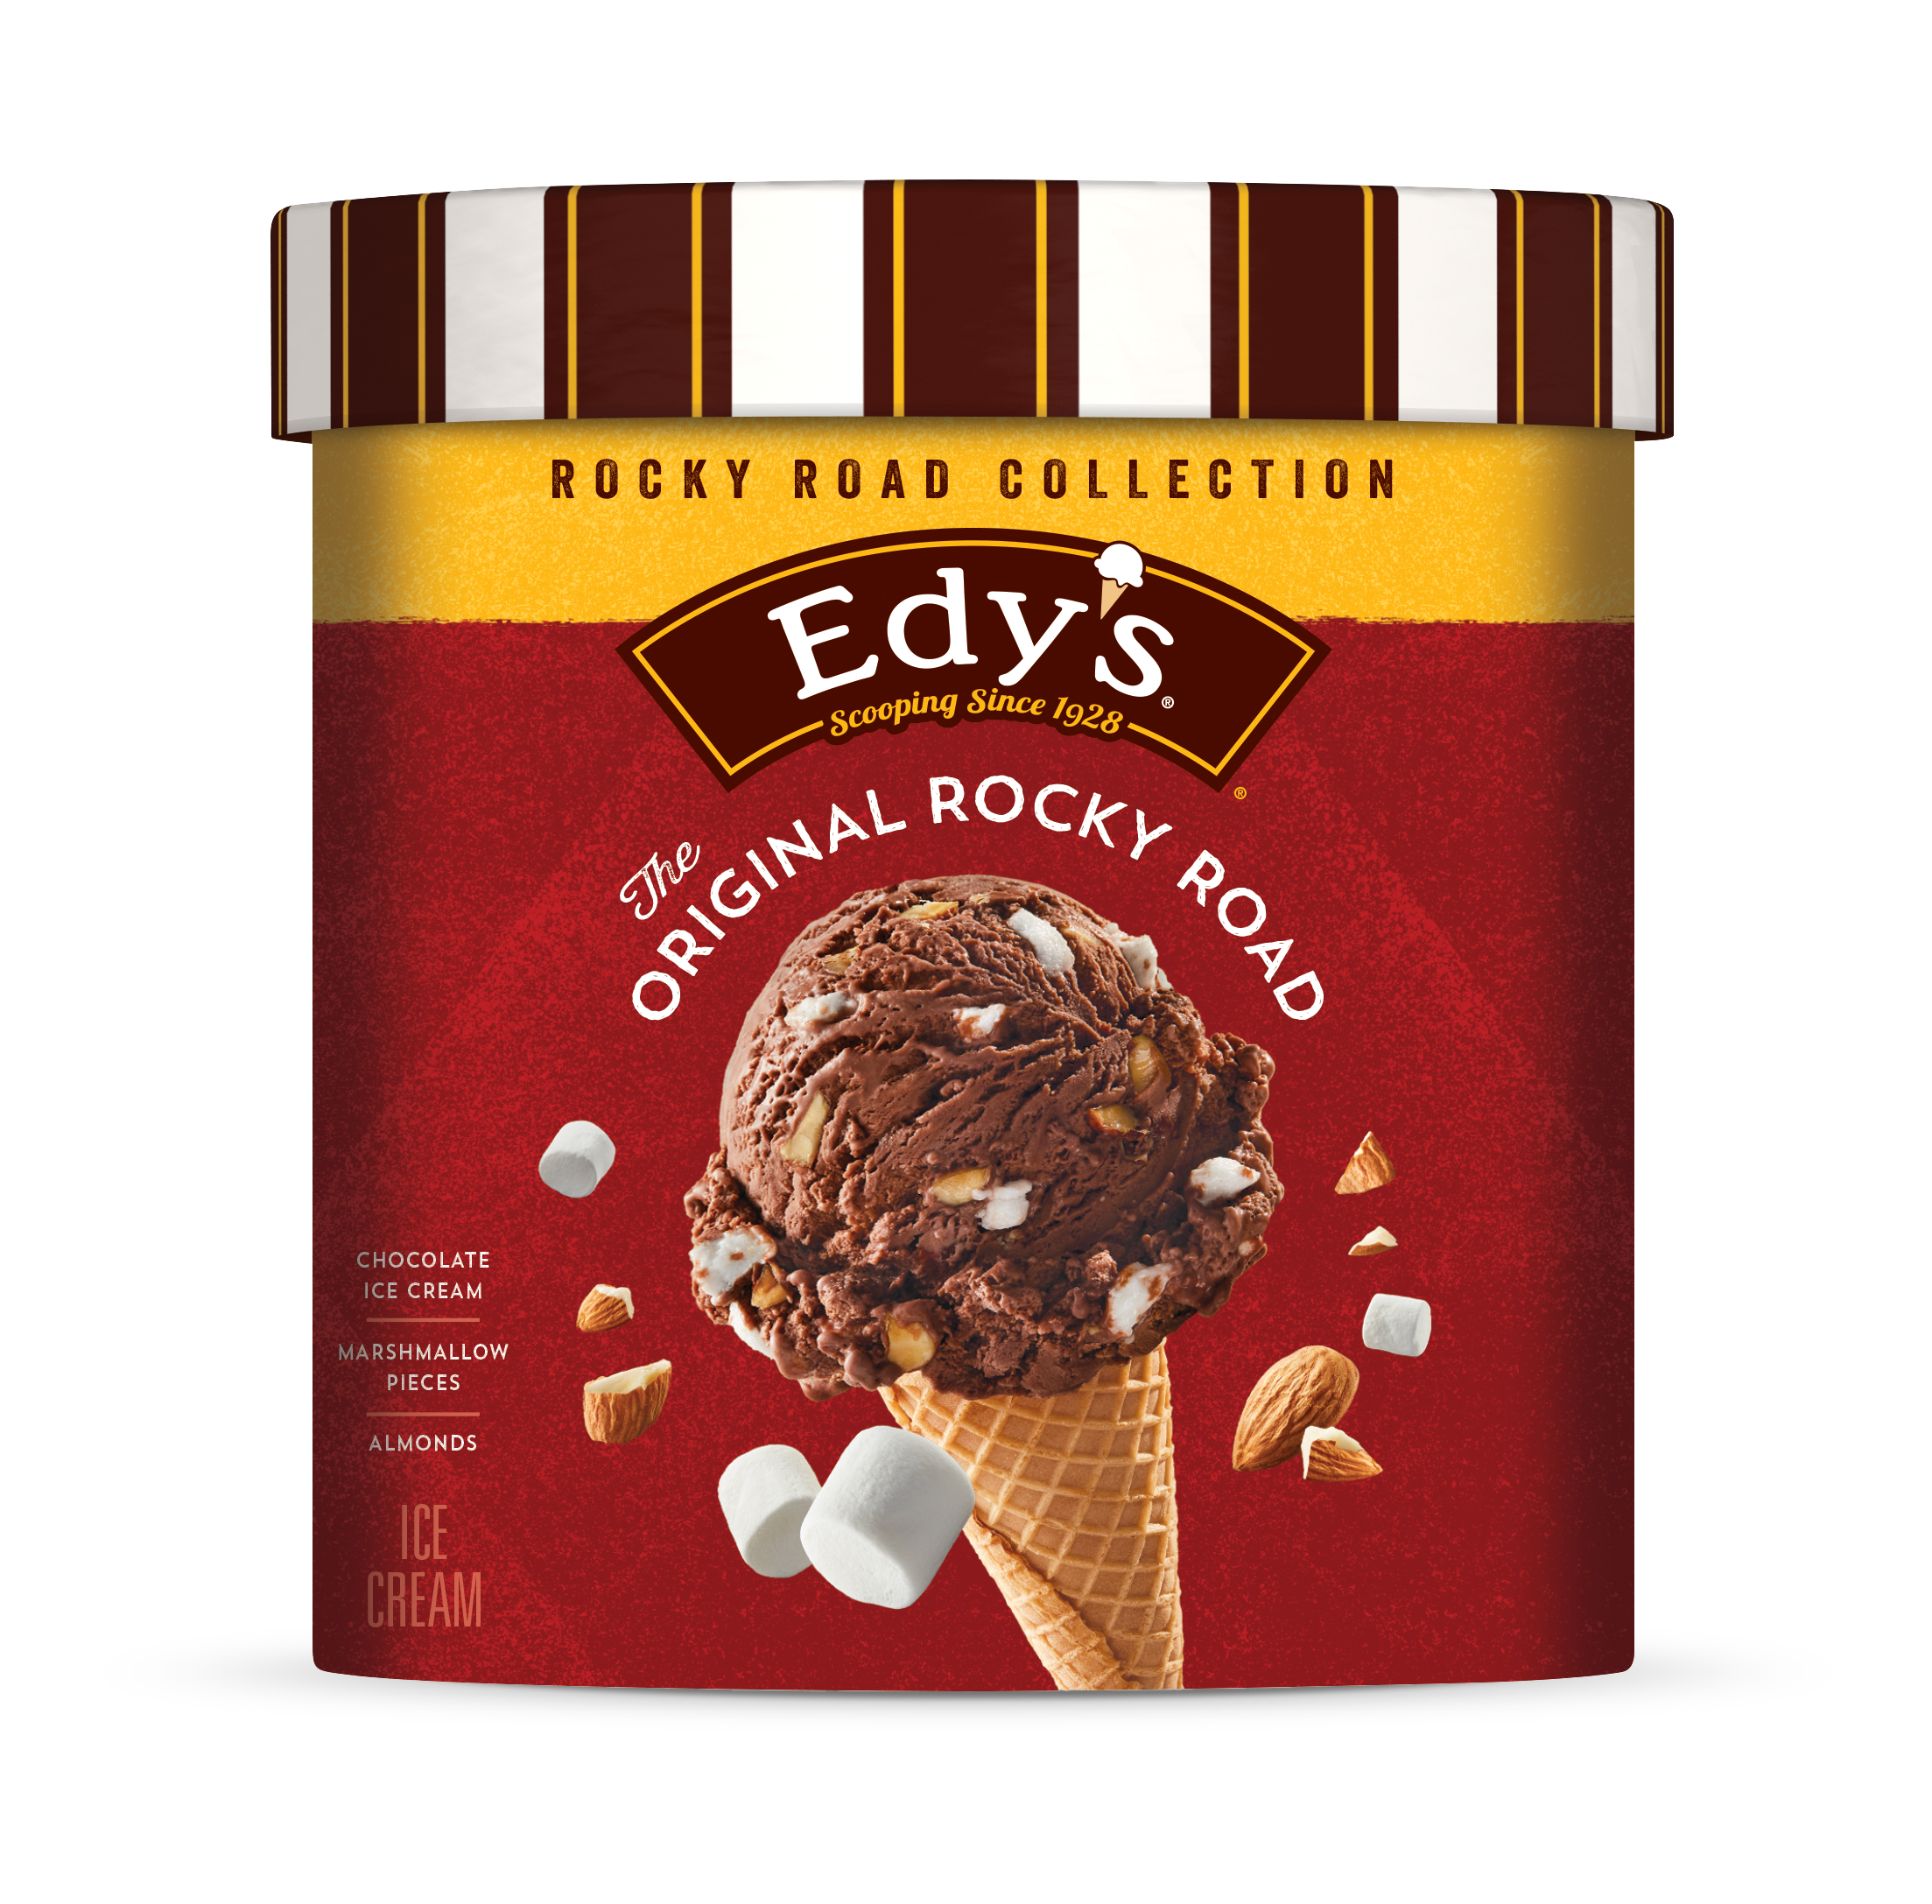 Carton of Edy's original rocky road ice cream